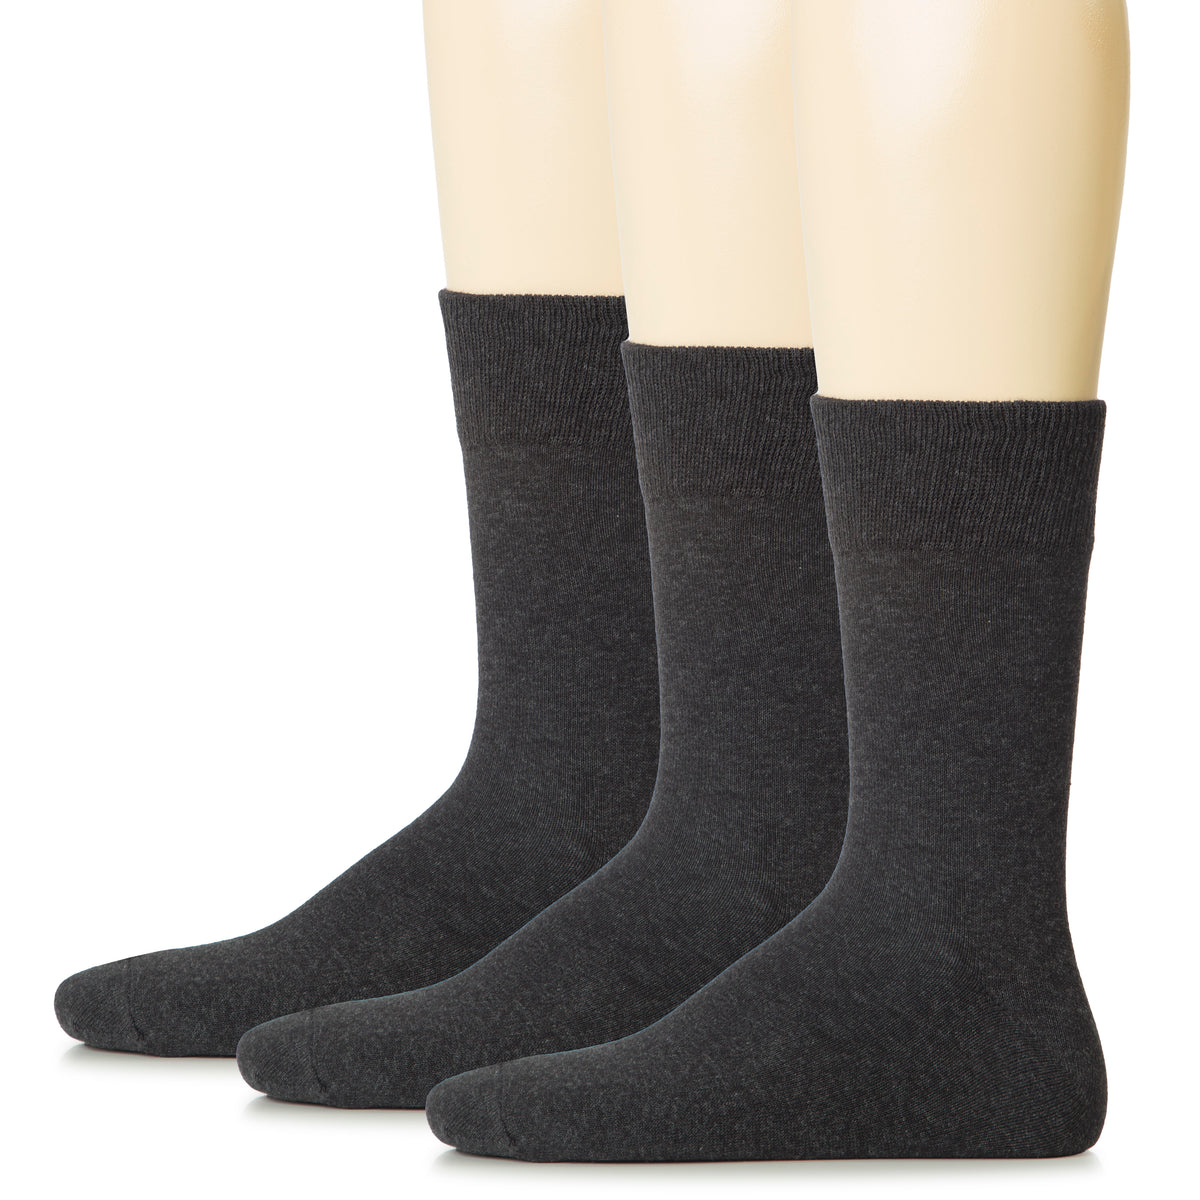 Hugh Ugoli Men Cotton Dress Socks XL / L / M / S Sizes, 3 Pairs | Shoe Size: 13-15 | Charcoal